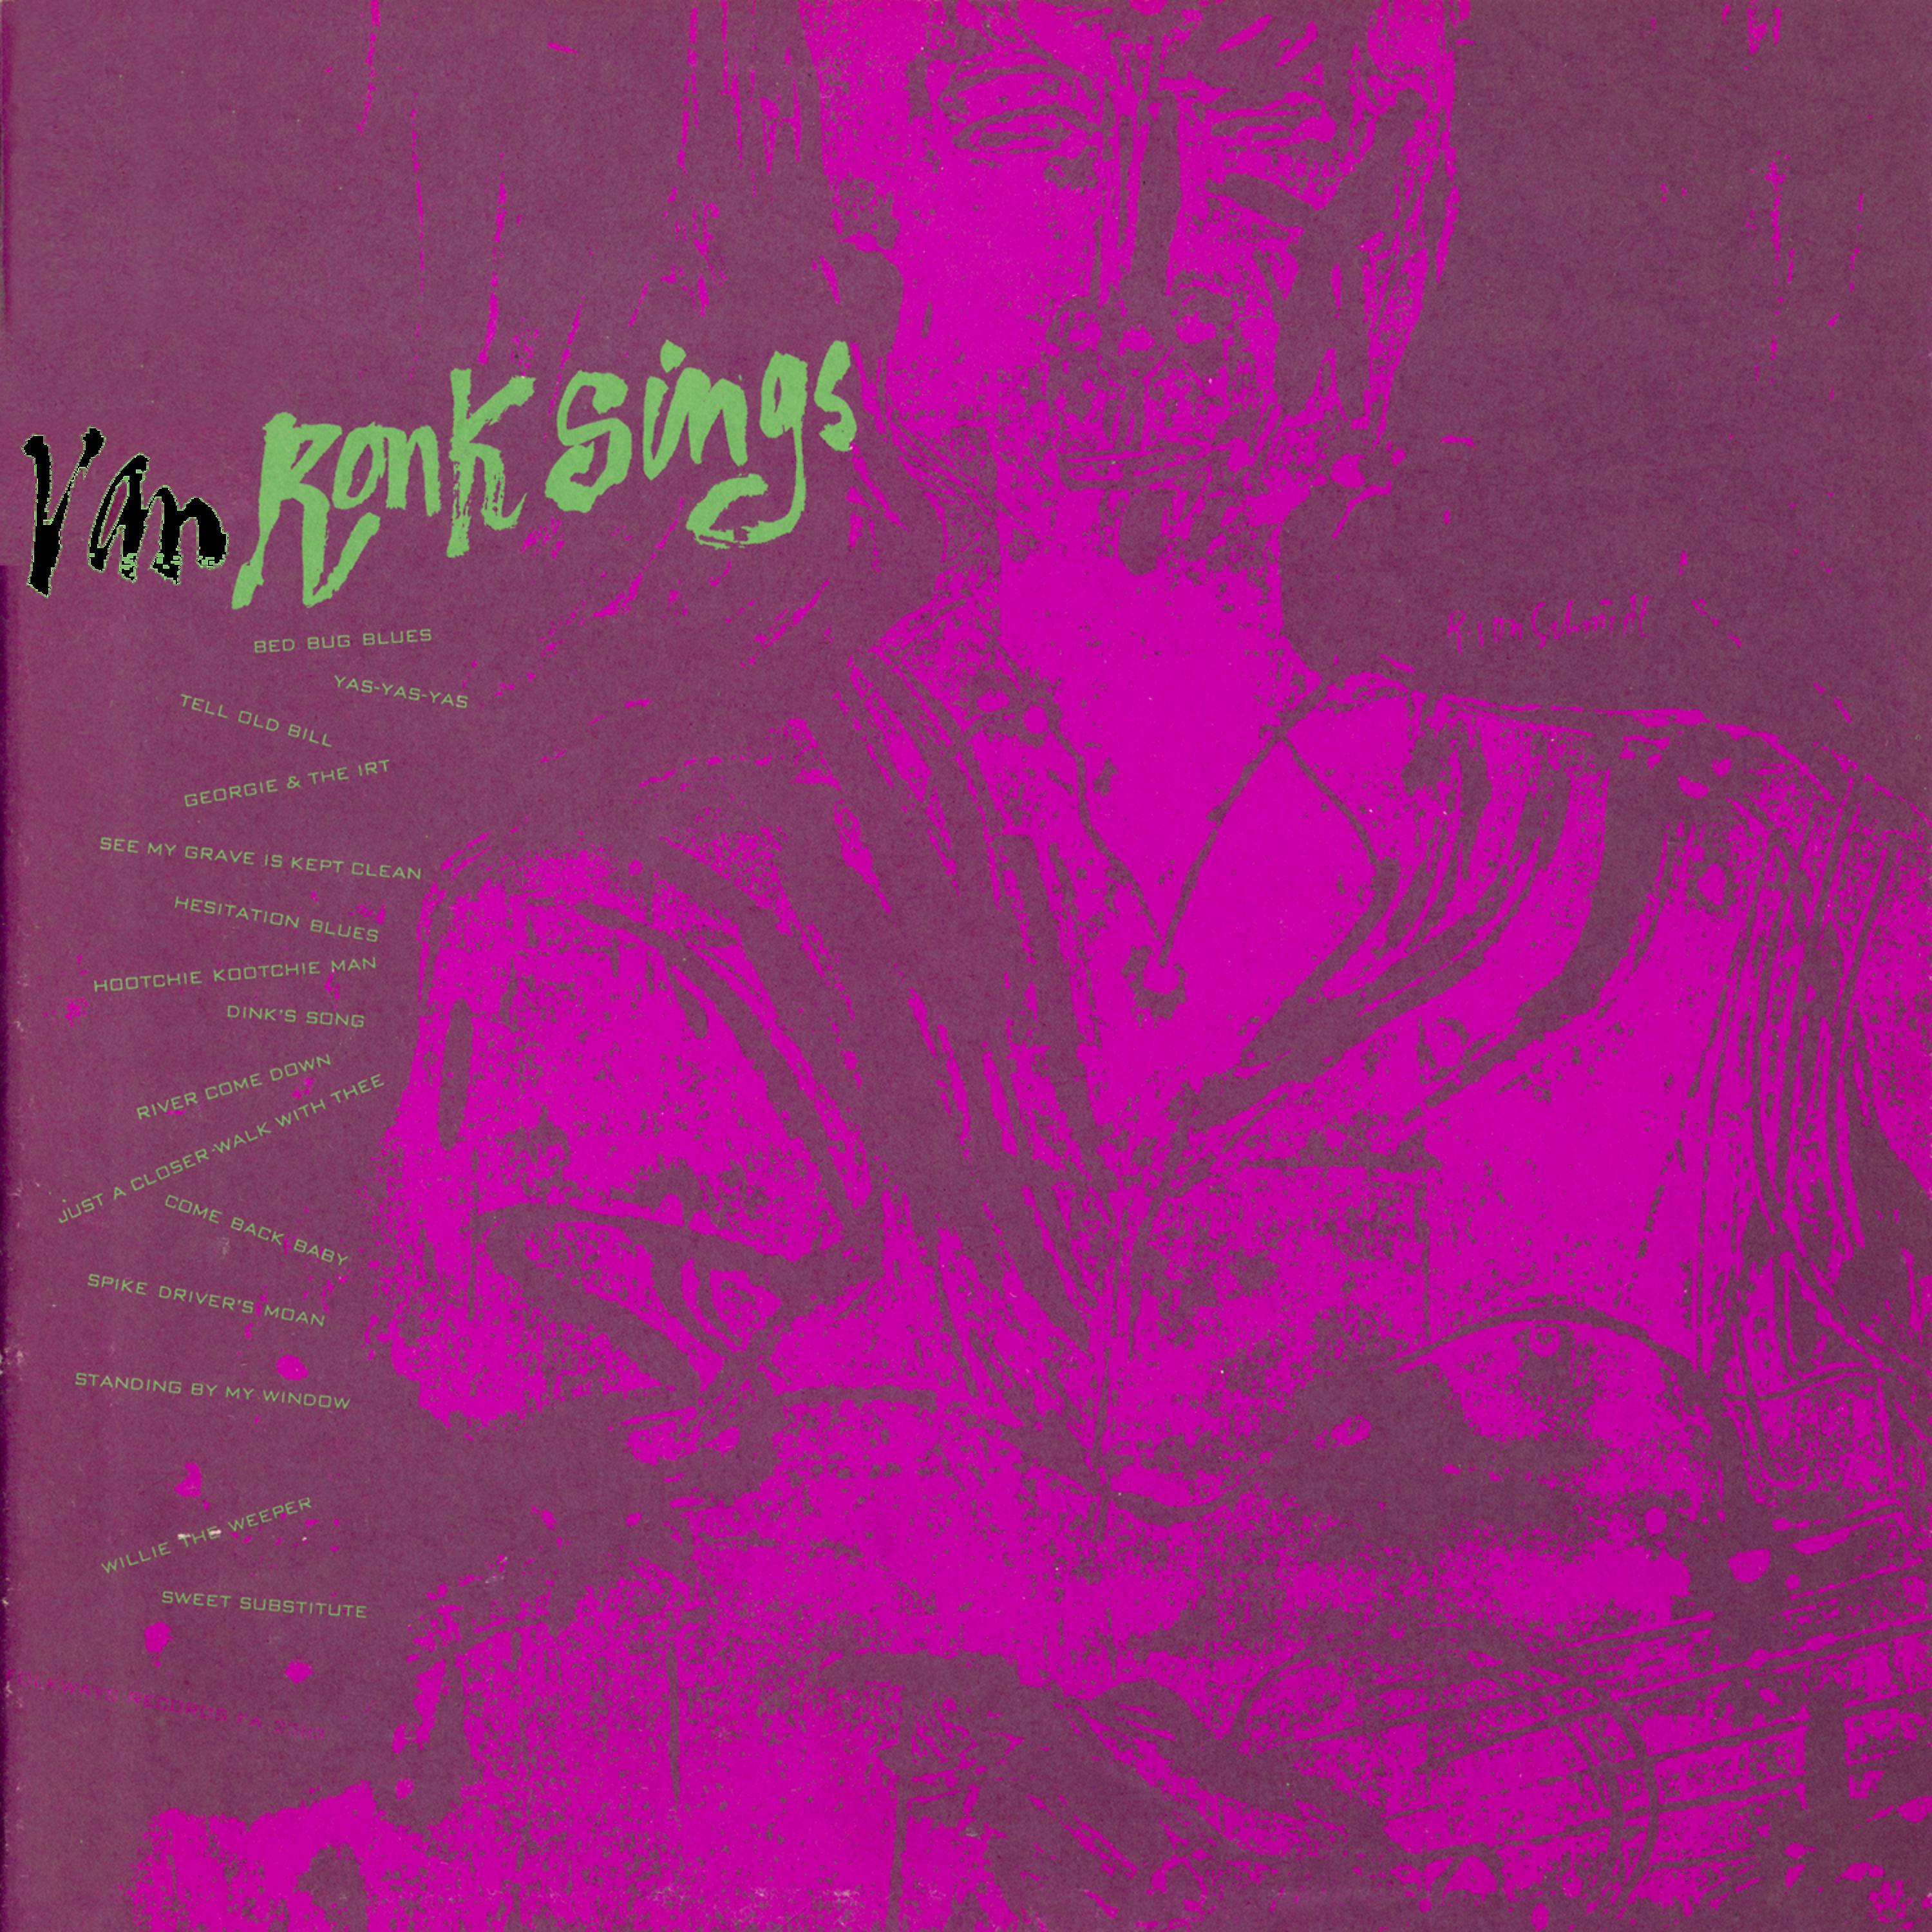 Постер альбома Dave Van Ronk Sings